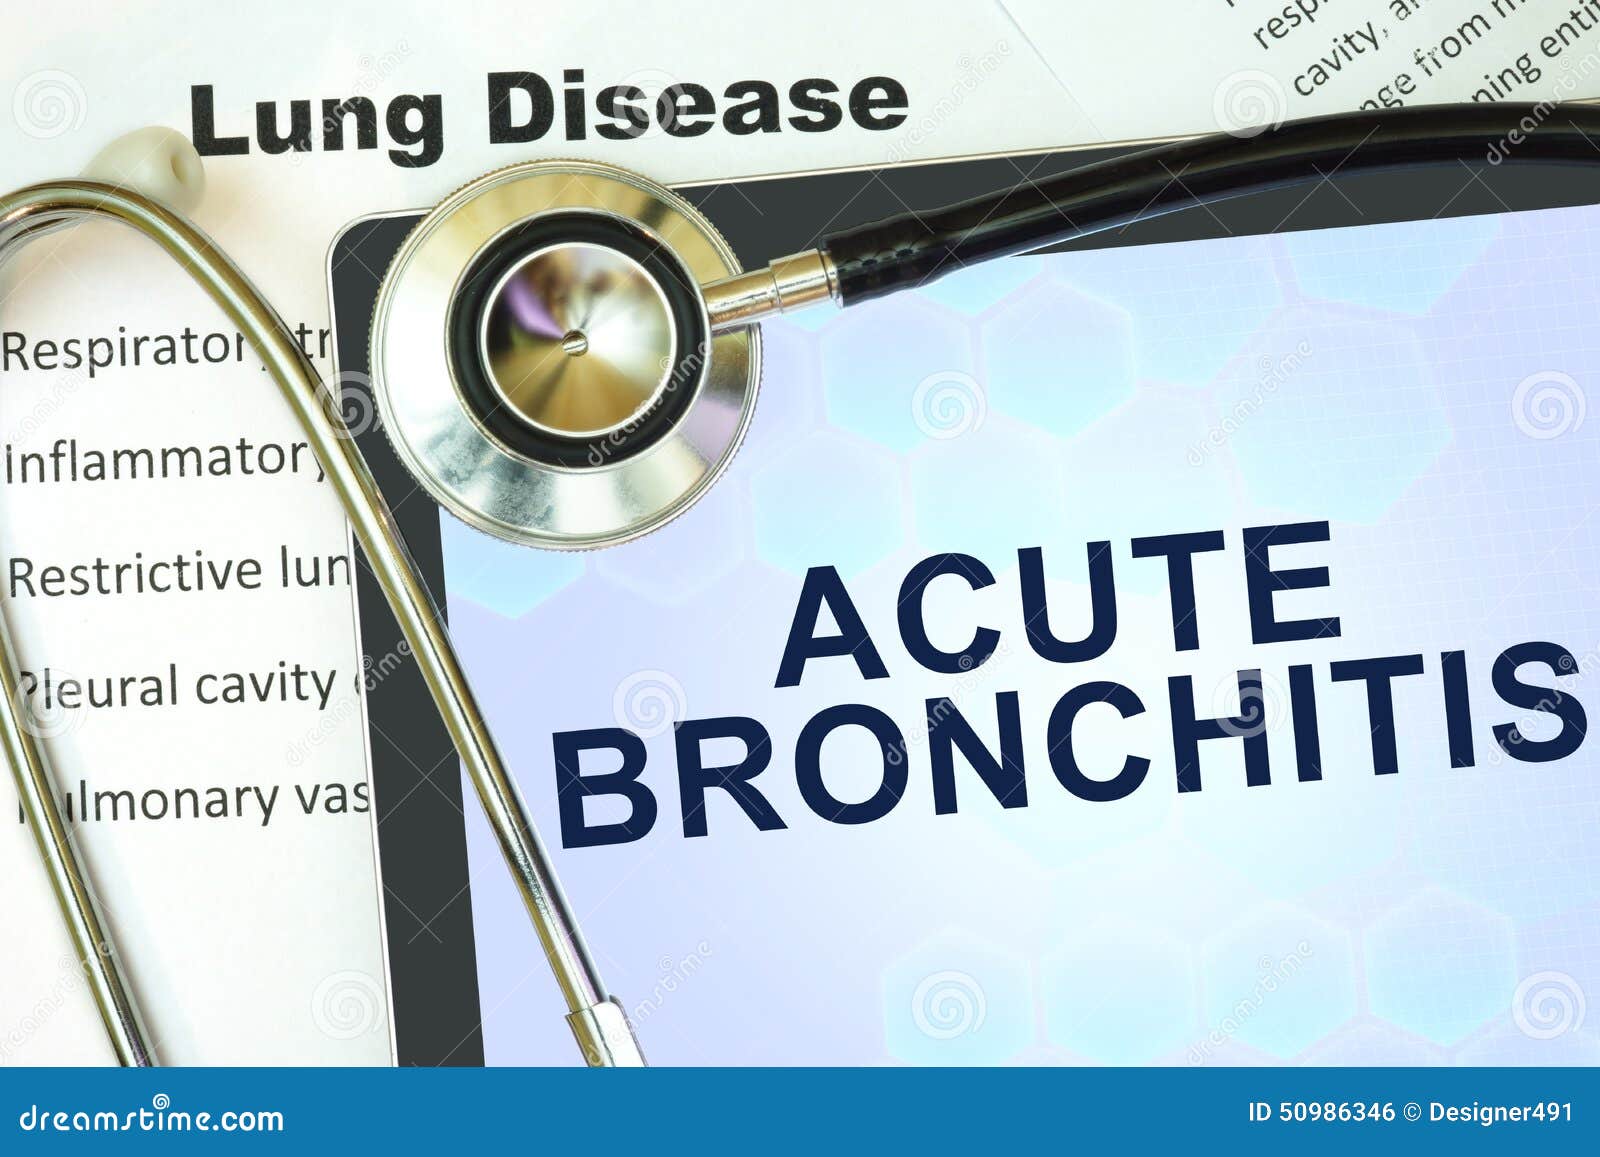 acute bronchitis